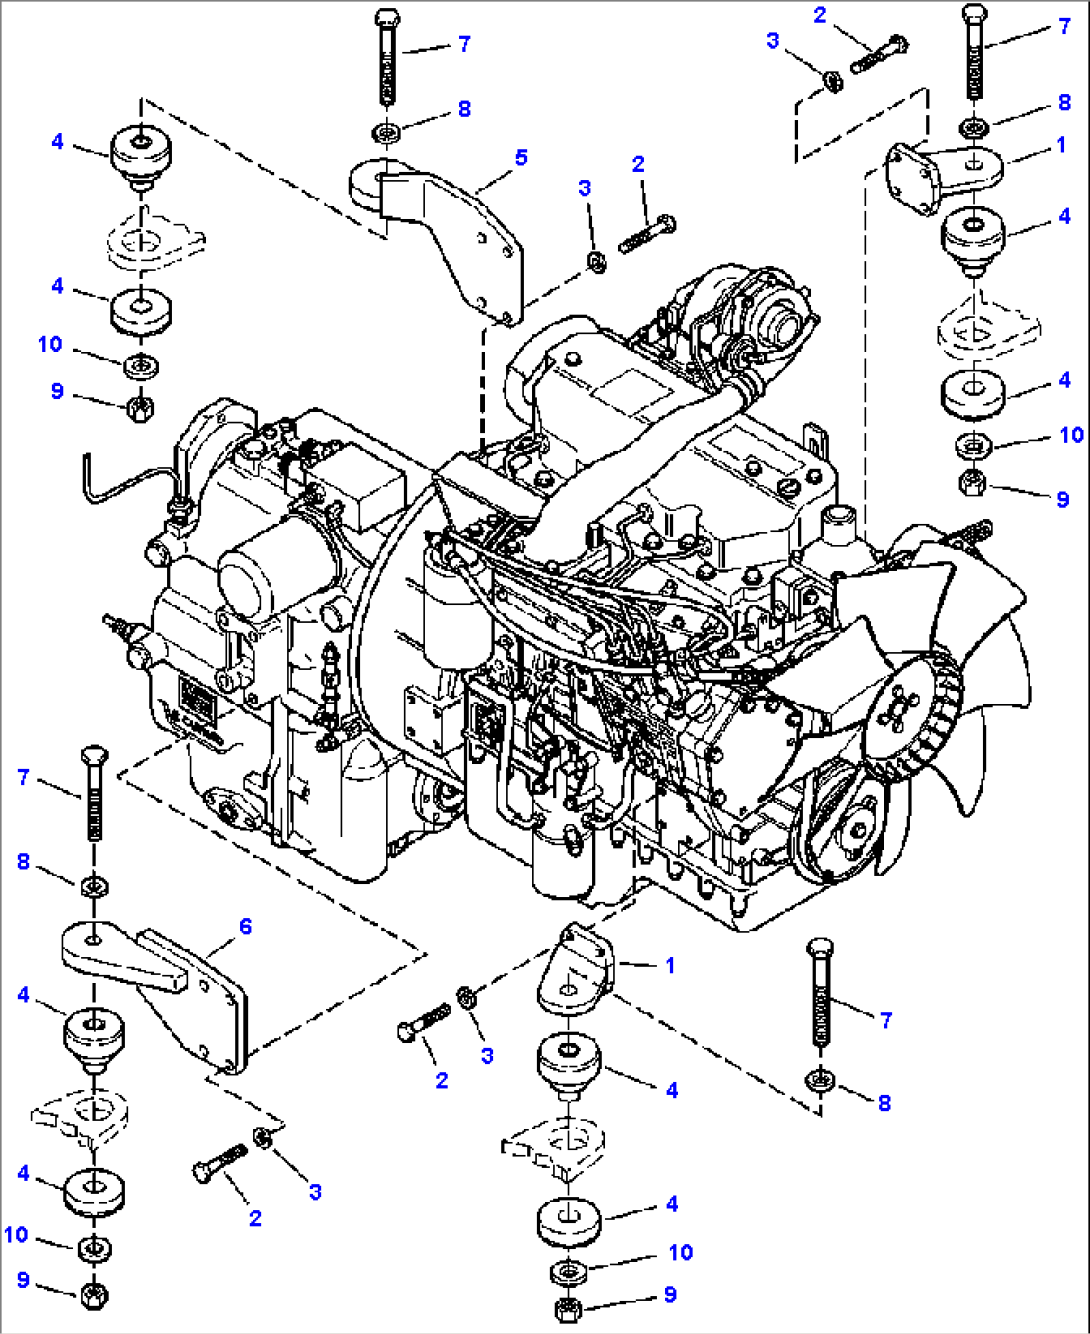 FIG. B1000-01A1 ENGINE MOUNTING - II